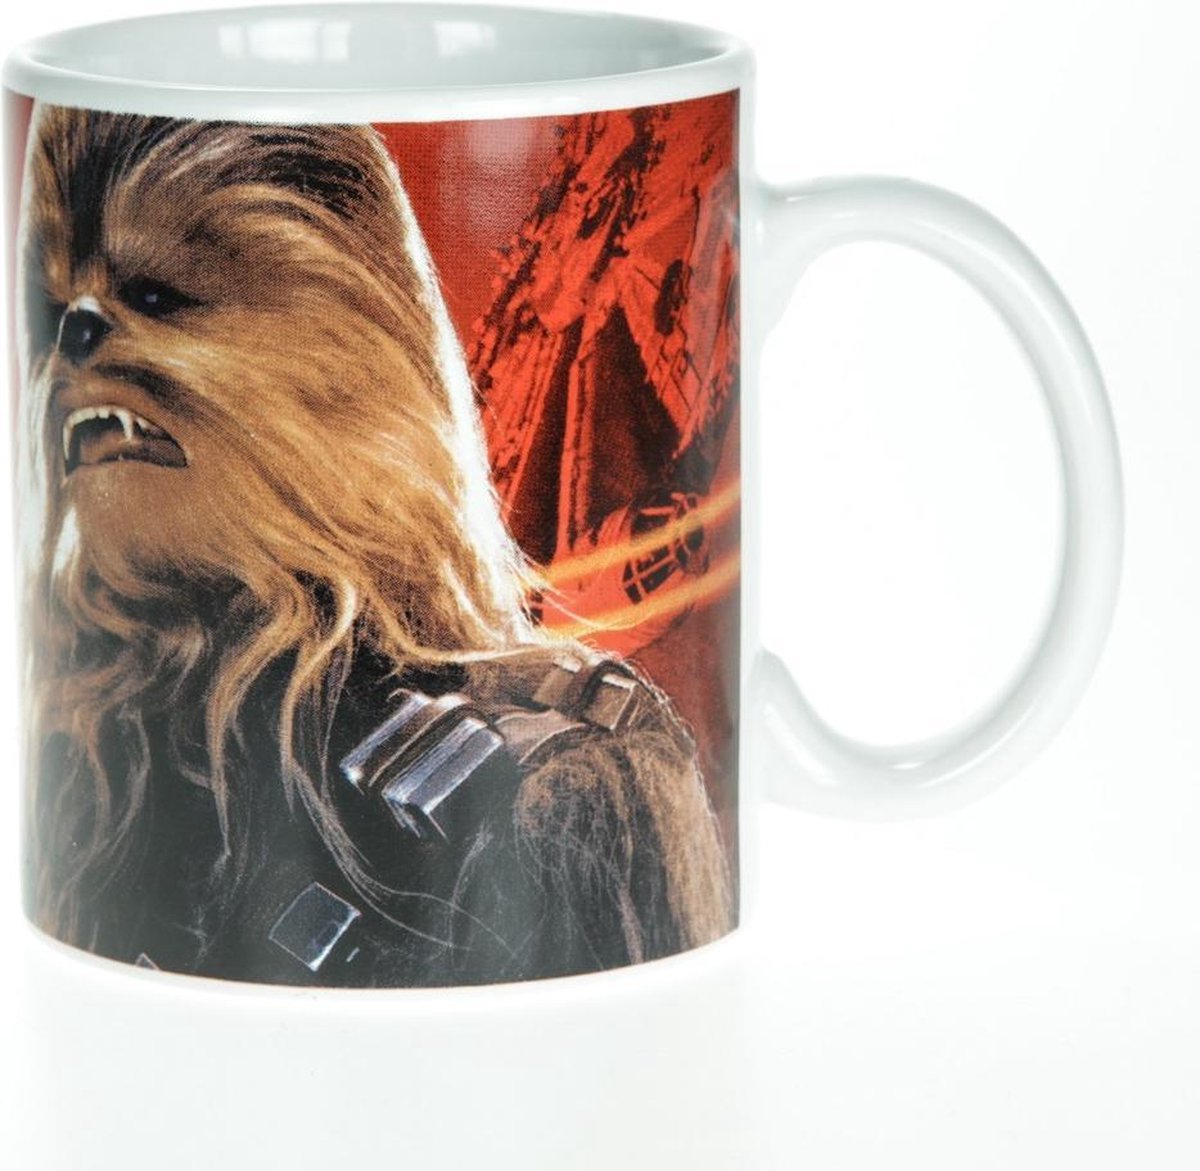 Star Wars awakening Chewbacca 11OZ porcelain mug in gift box